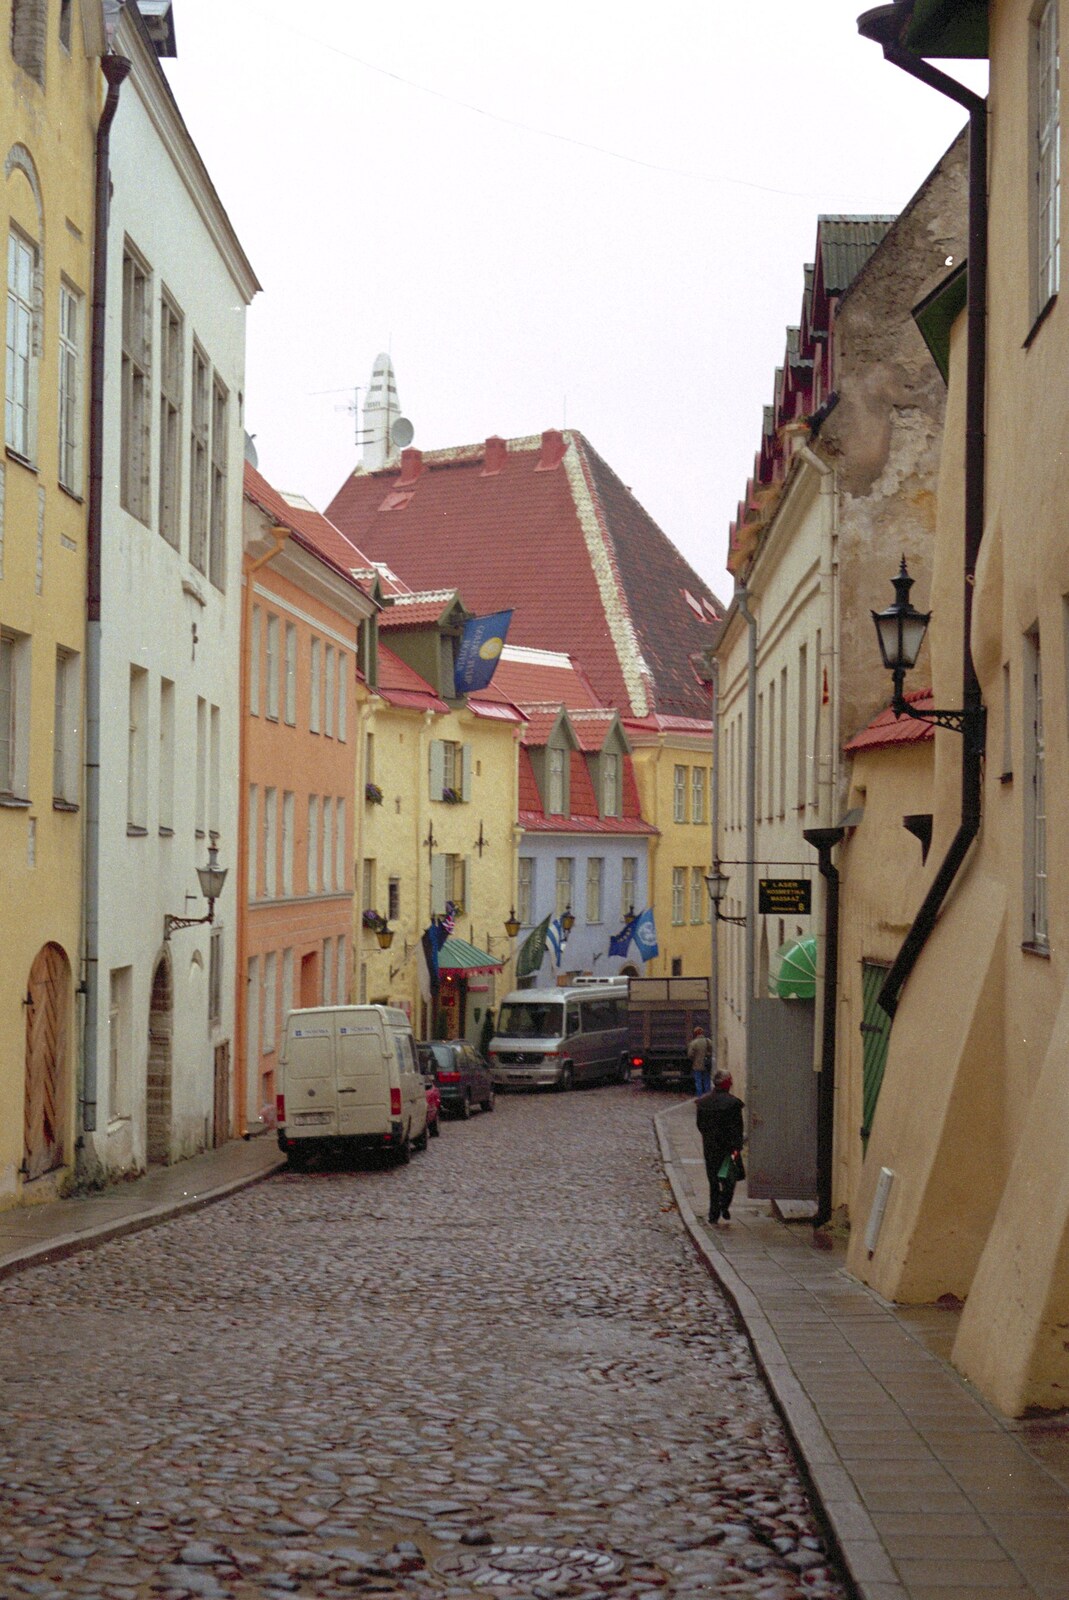 A quaint Tallinn street from A Day Trip to Tallinn, Estonia - 2nd December 1999